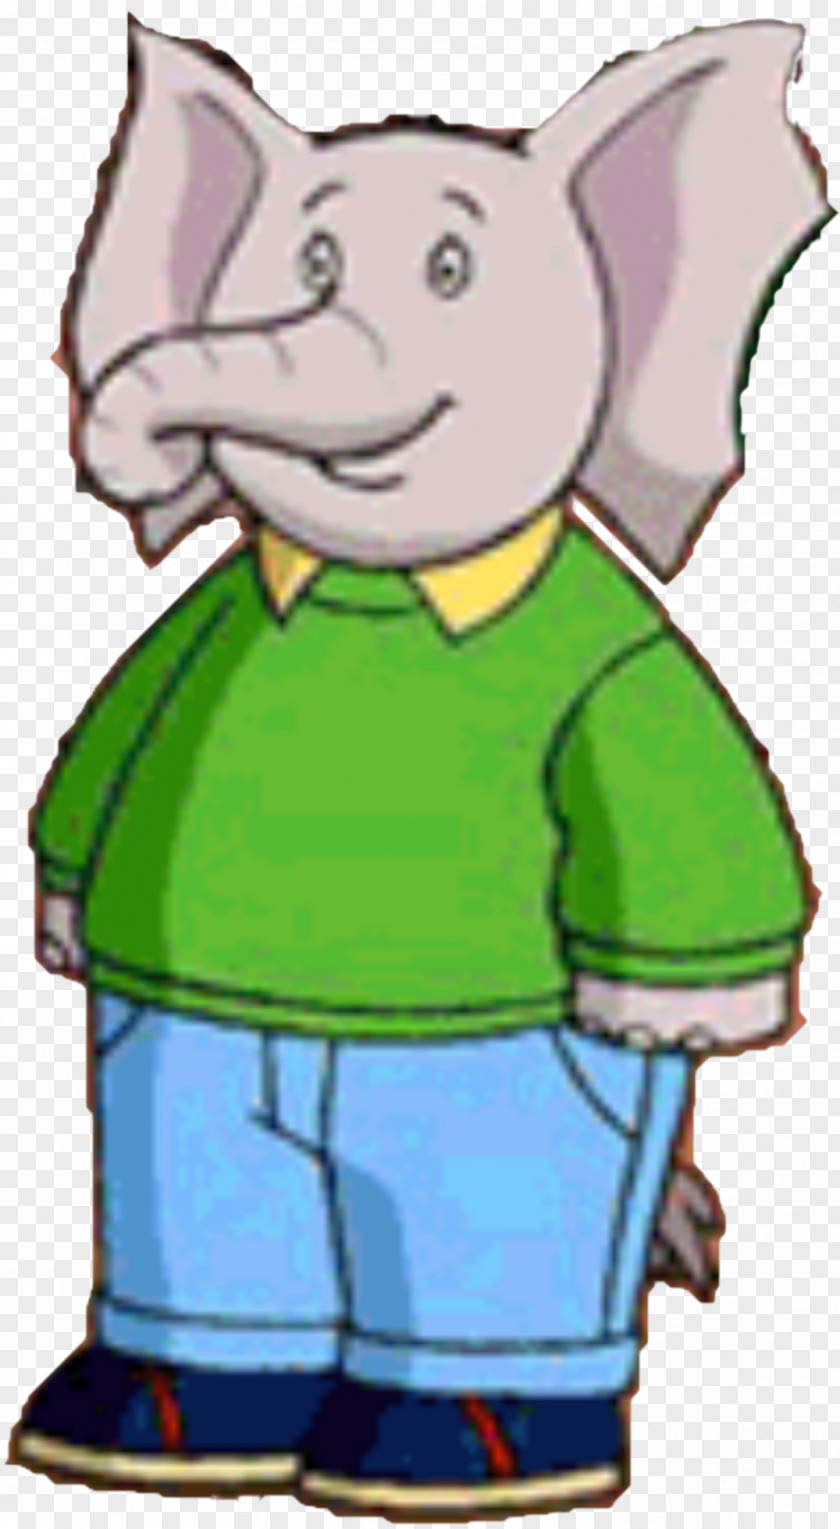 Family Cartoon Character Clip Art PNG